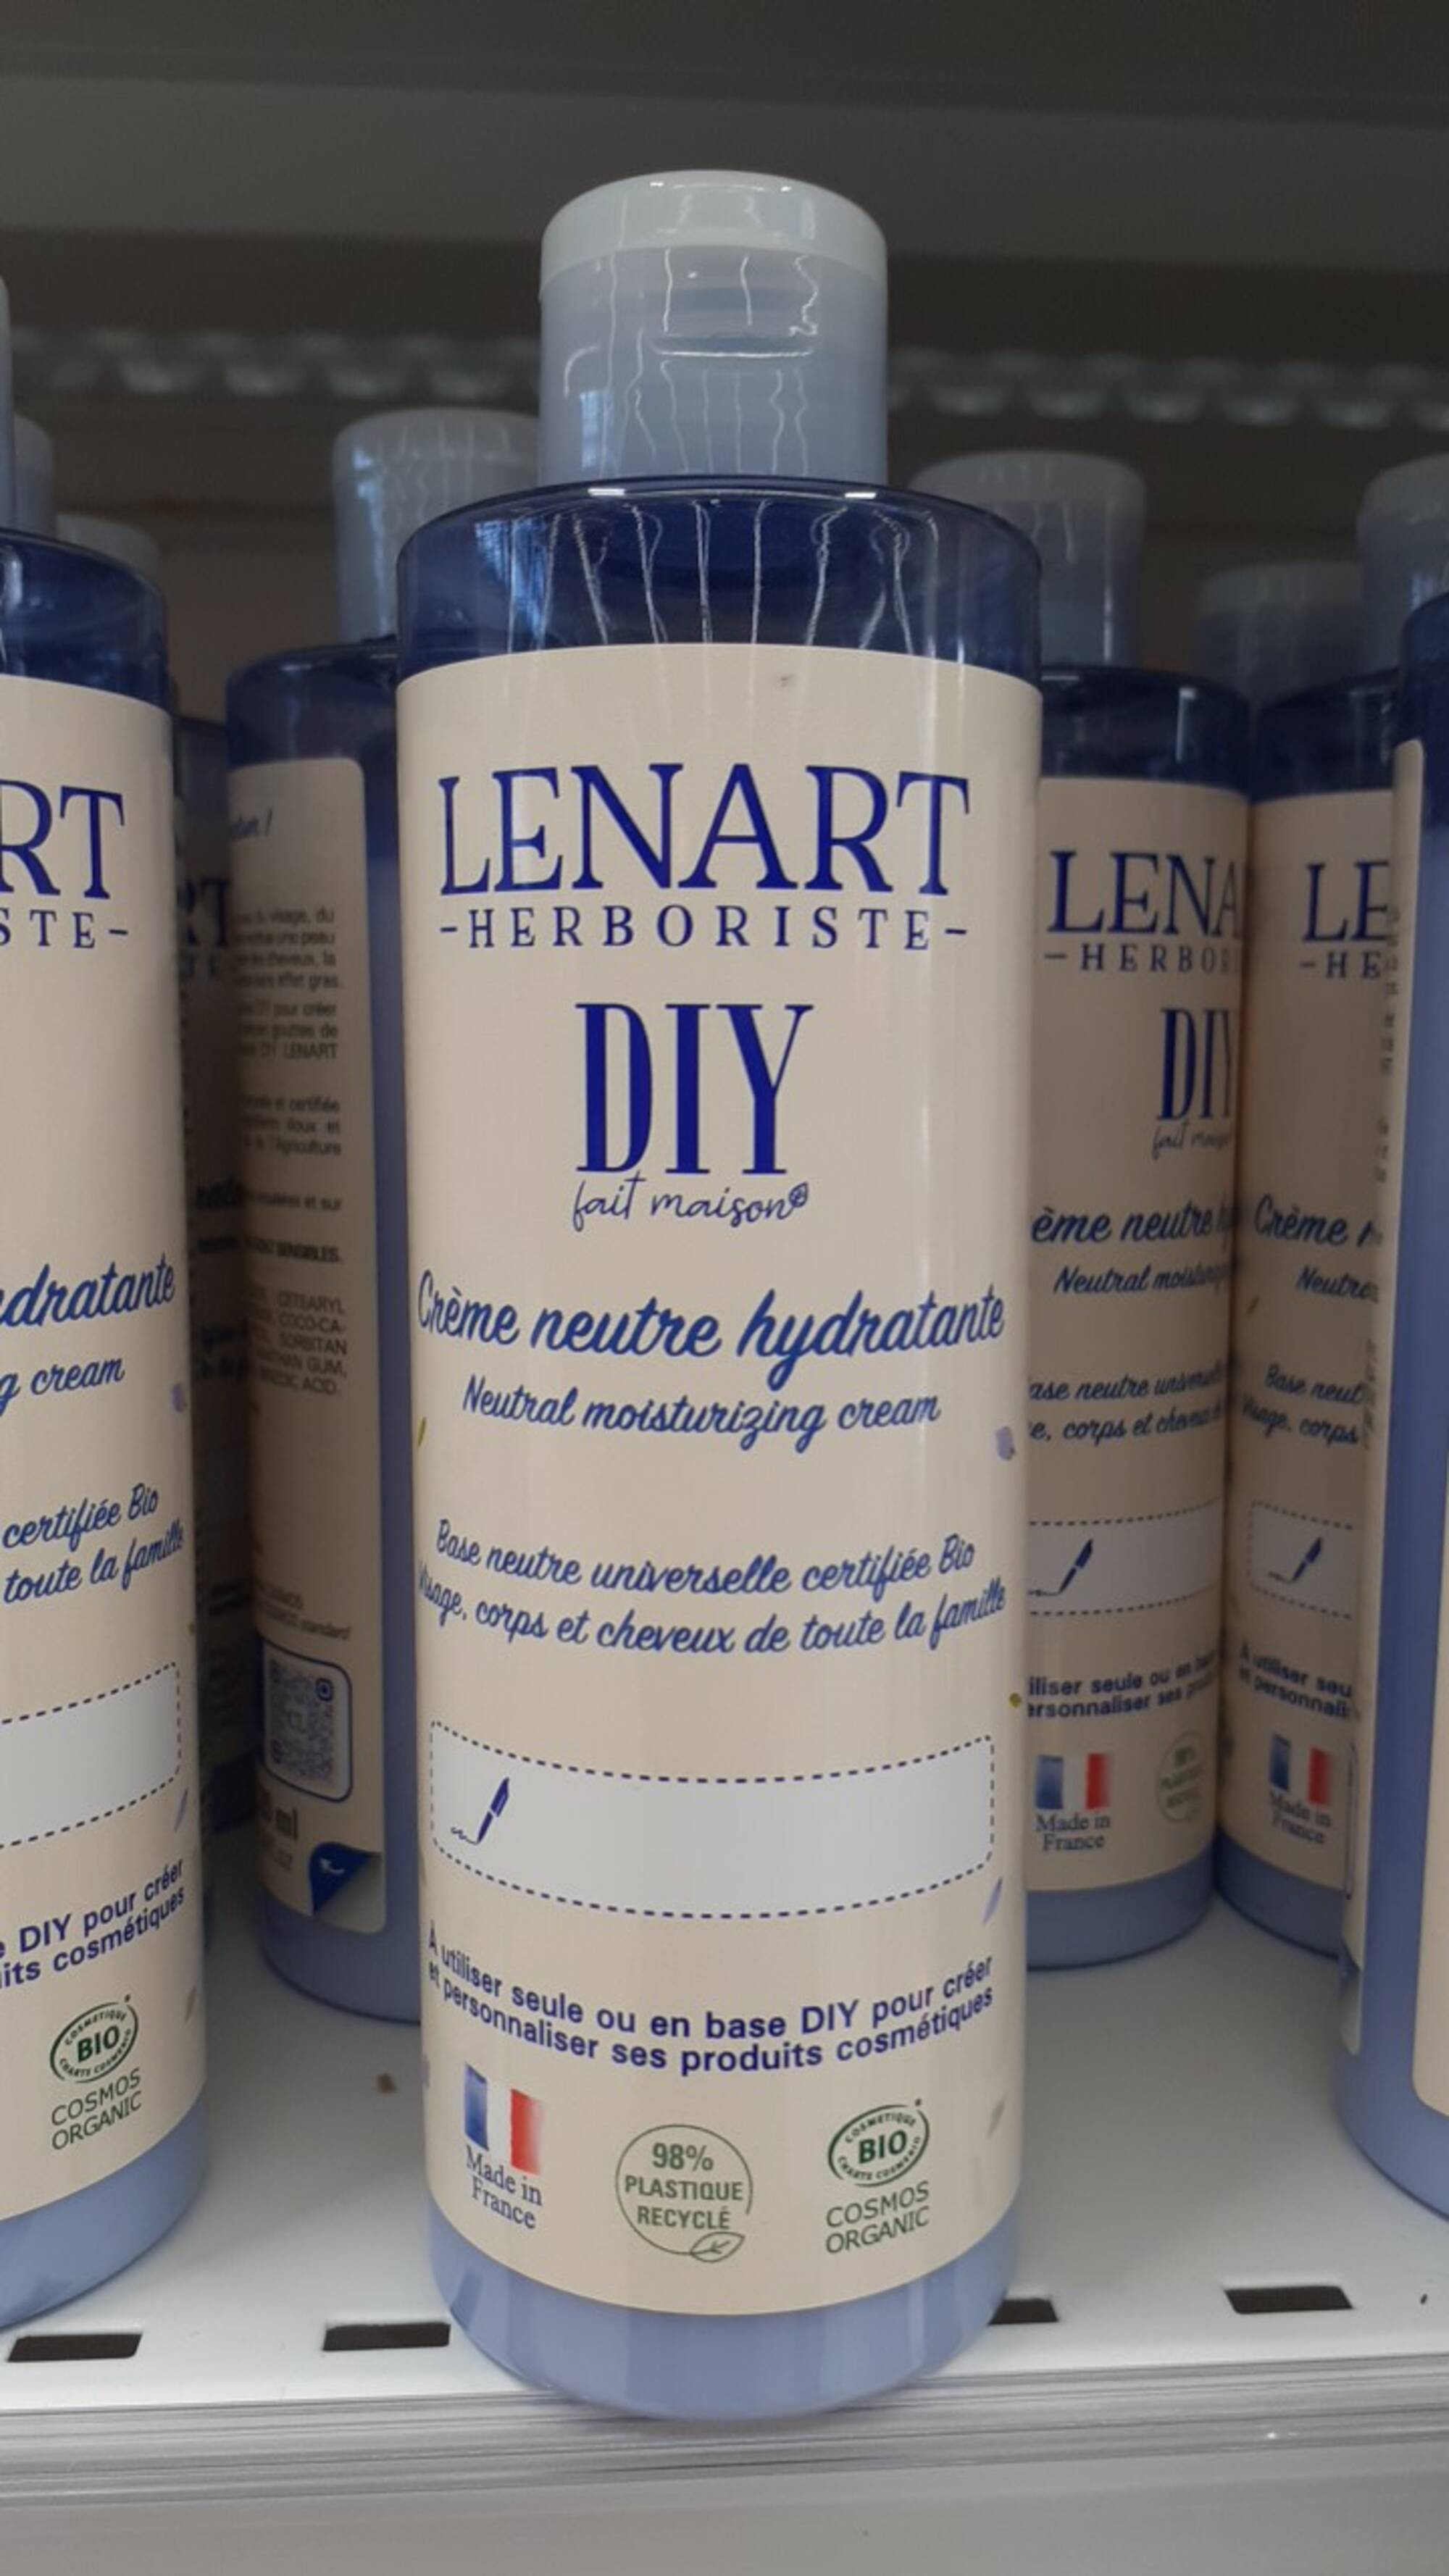 LENART HERBORISTE - Diy - Crème neutre hydratante